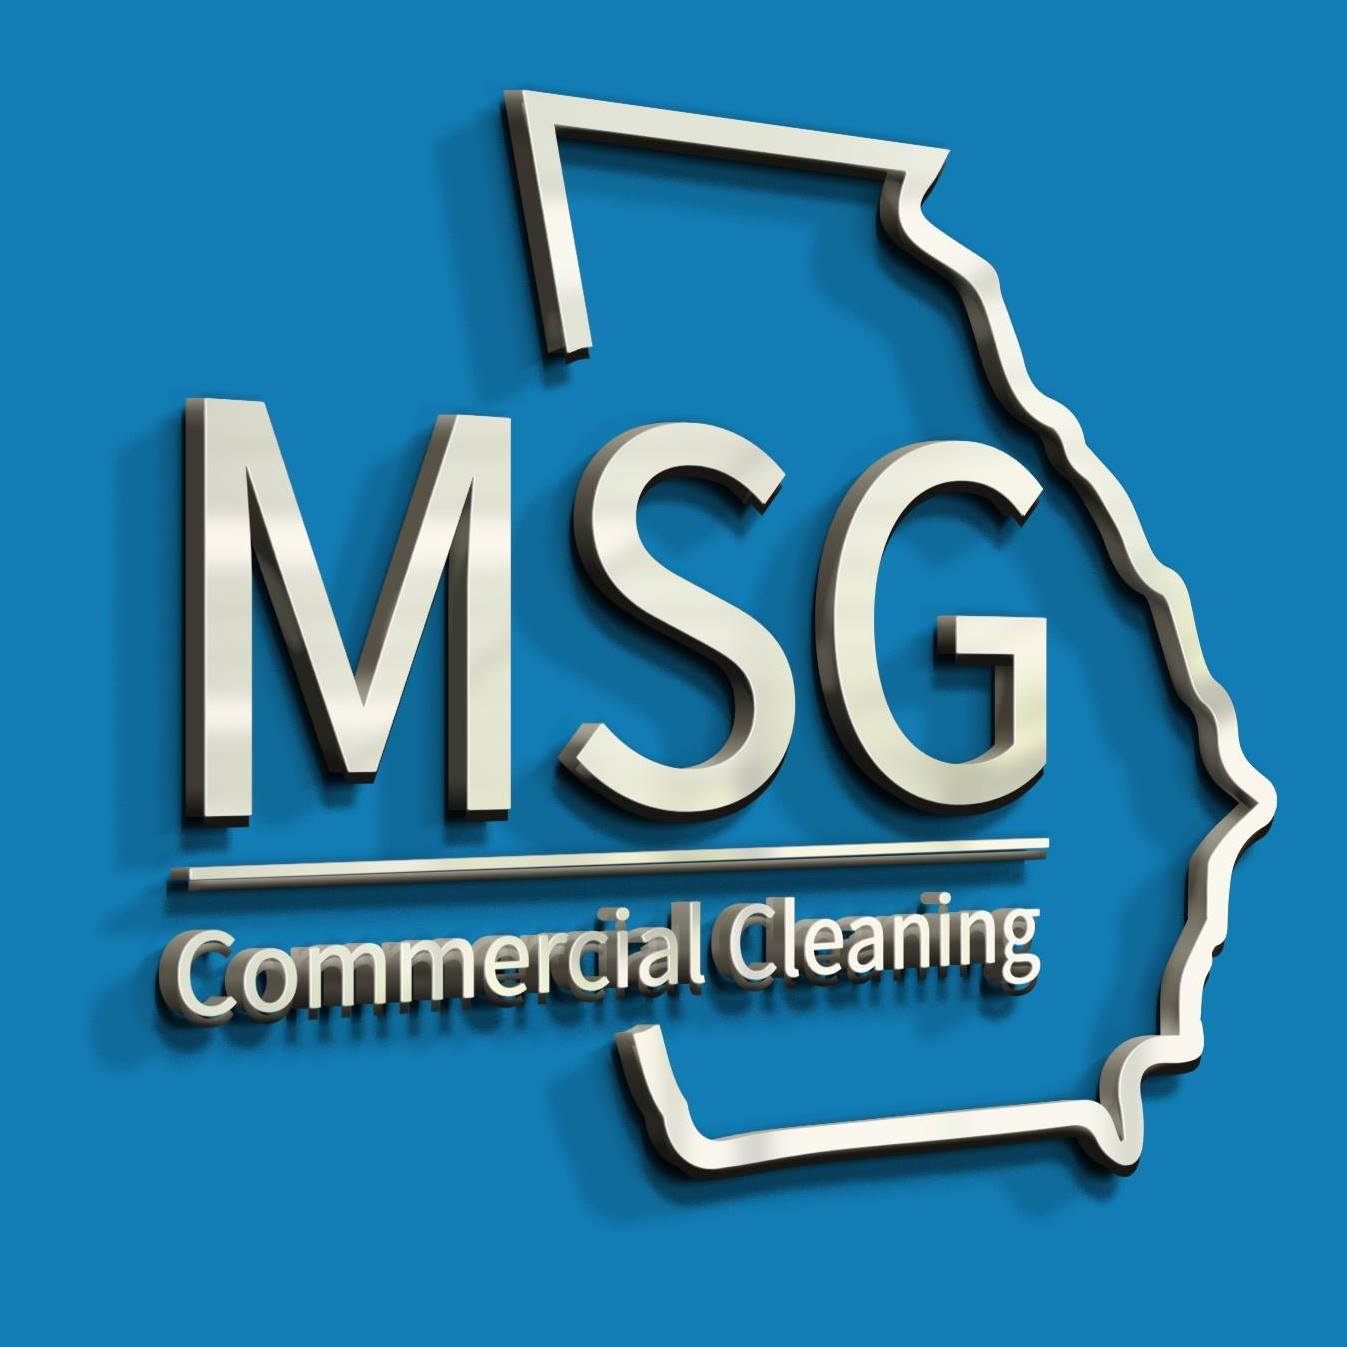 Maintenance Services of Georgia Inc. logo